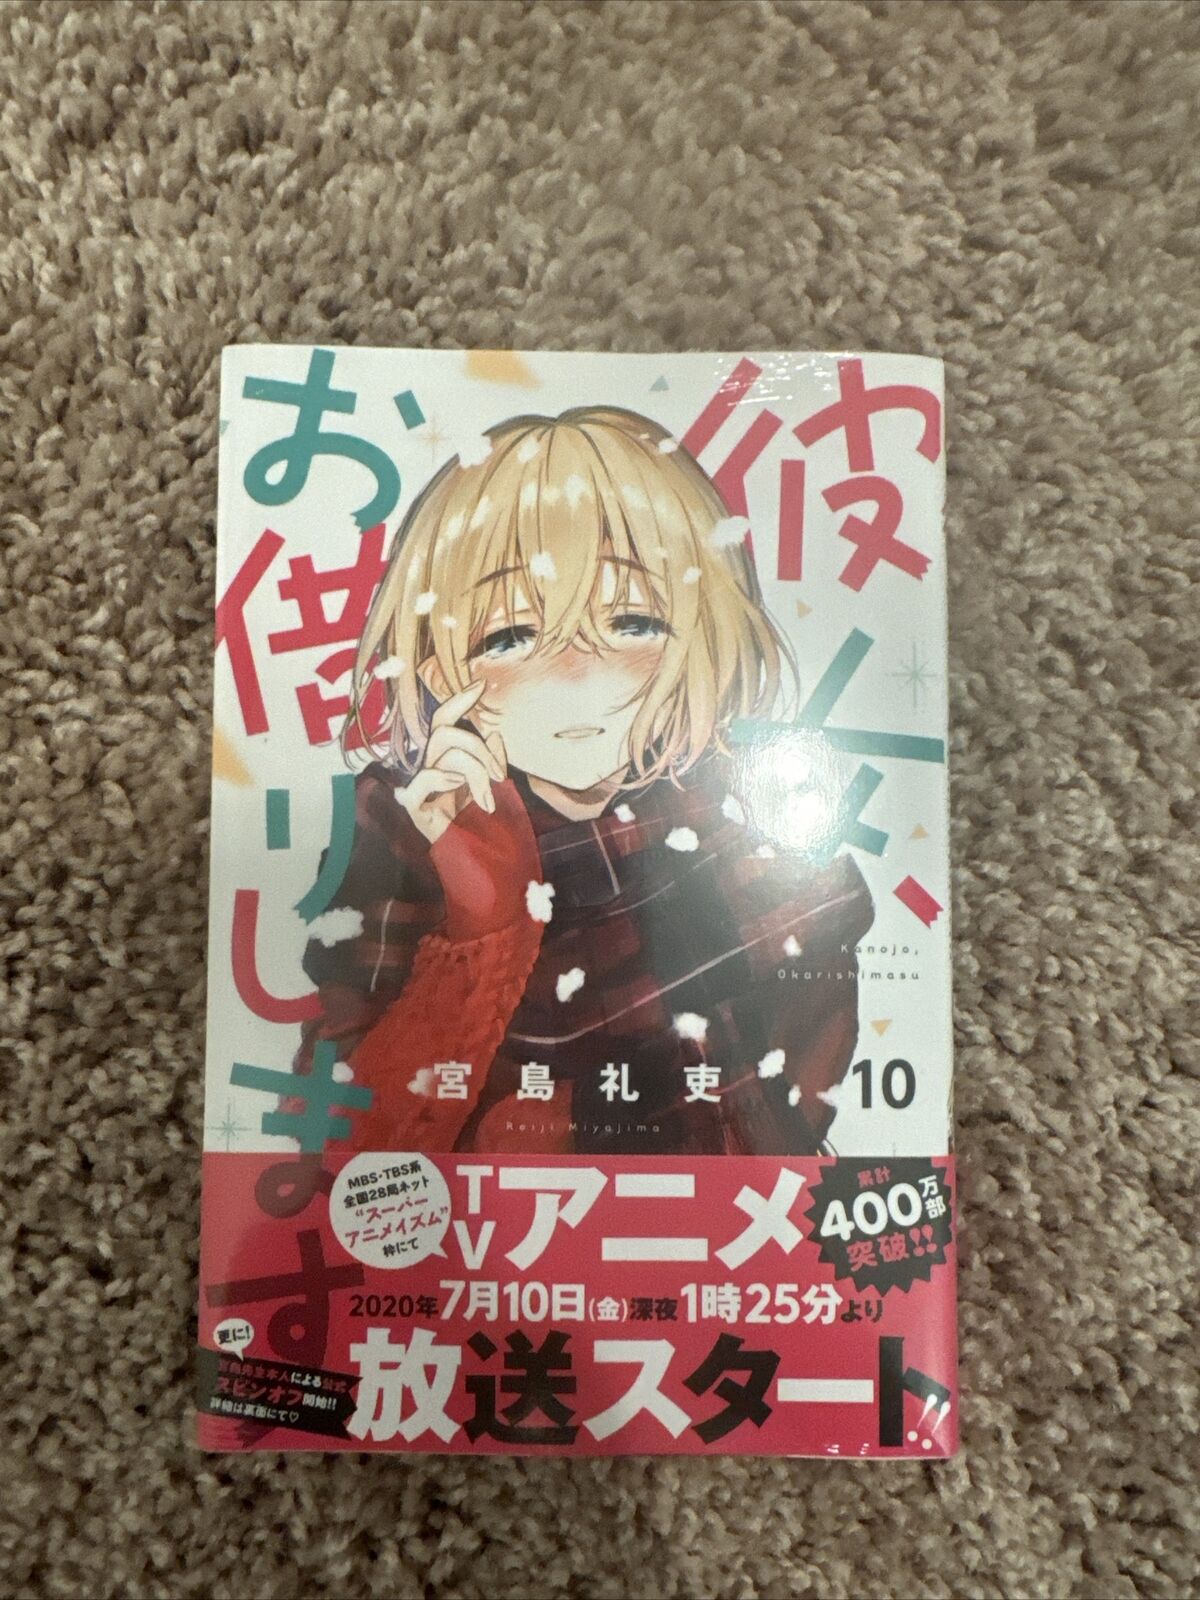 Rent a Girlfriend Kanojo Okarishimasu Manga Vol. 10 (Japanese)